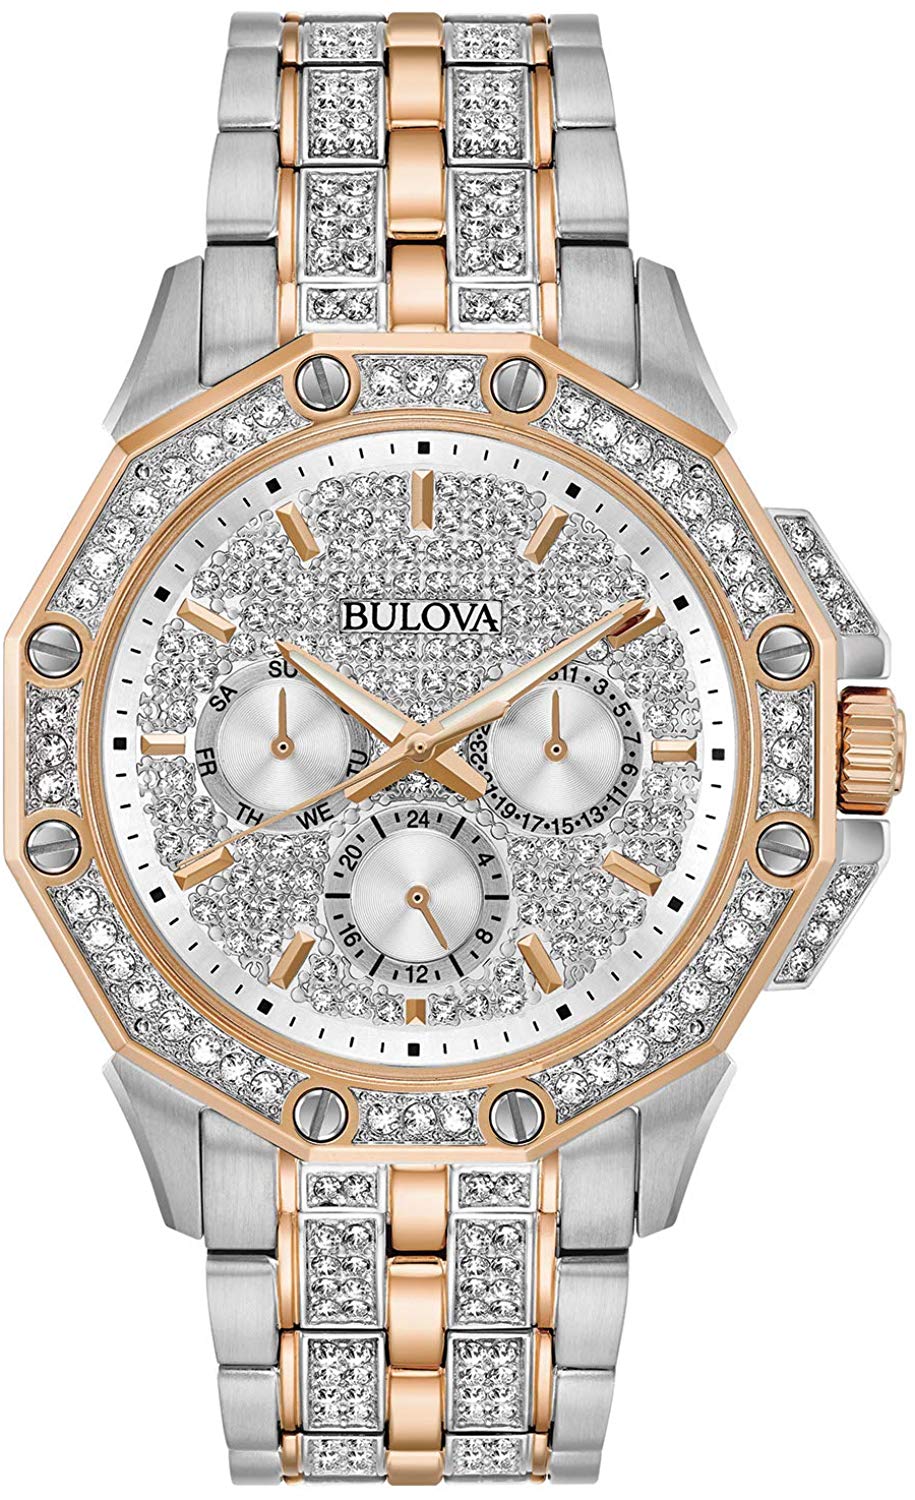 Bulova Octava Crystal Two-Tone Chronograph Mens Watch 98C133